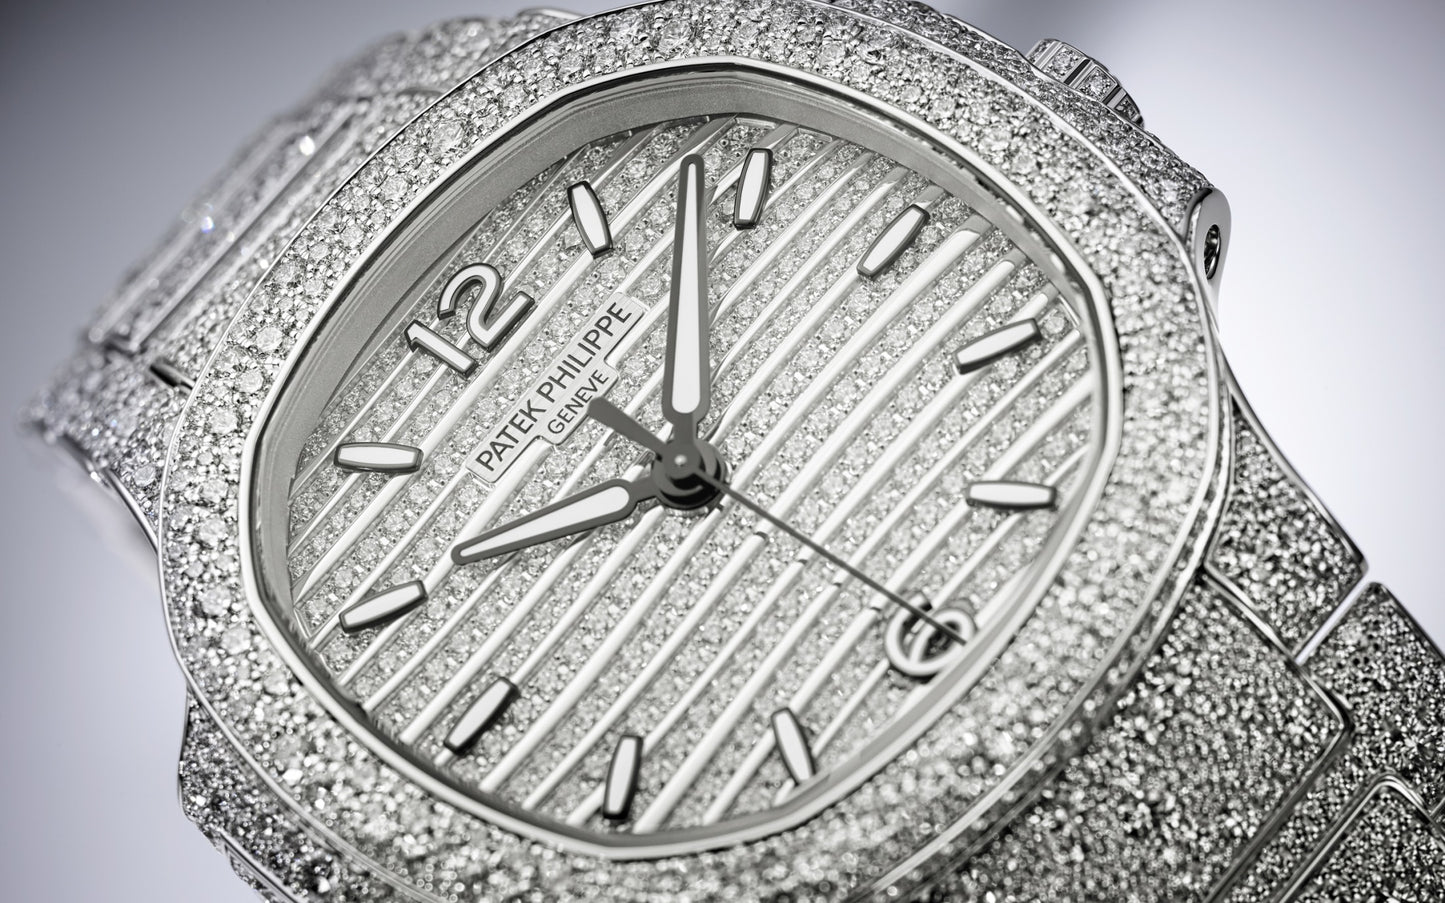 Patek Philippe Nautilus Haute Joaillerie Ladies Automatic Watch, 18K White Gold and Diamonds, 35,2mm, Ref# 7118/1450G-001, Hands